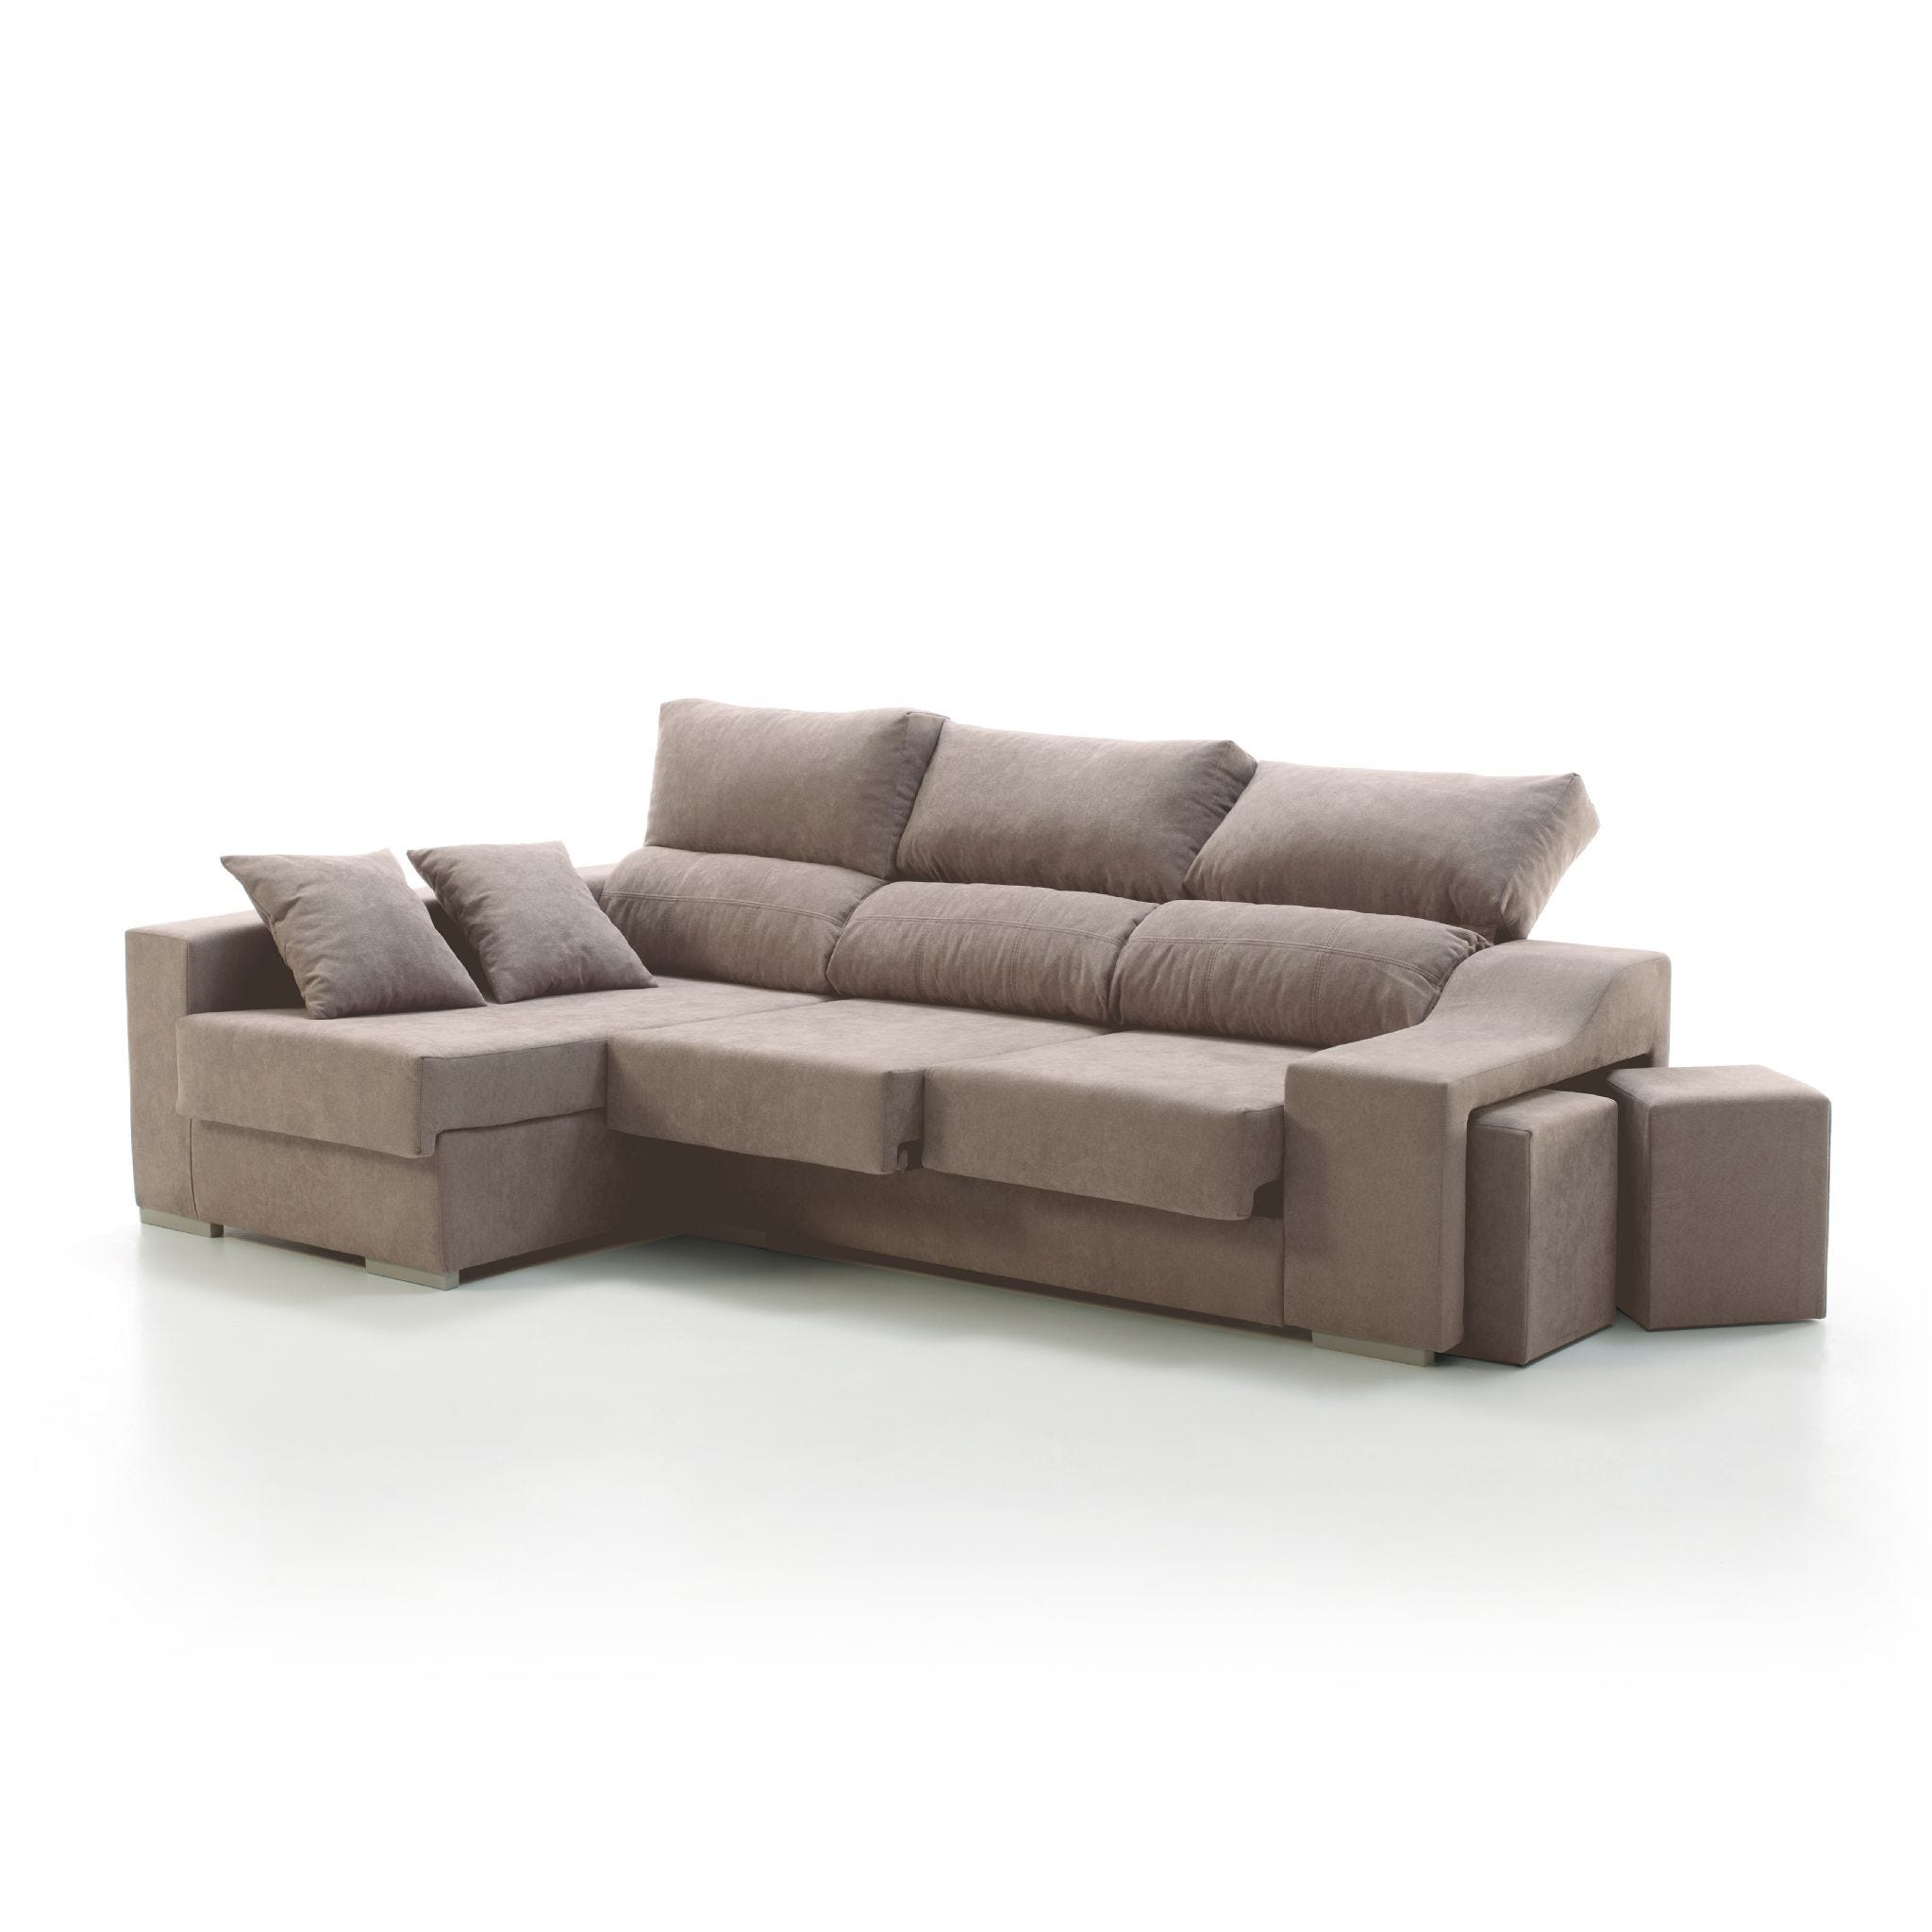 Dandy sofá chaise longue izquierda 4 plazas gris con almacenaje